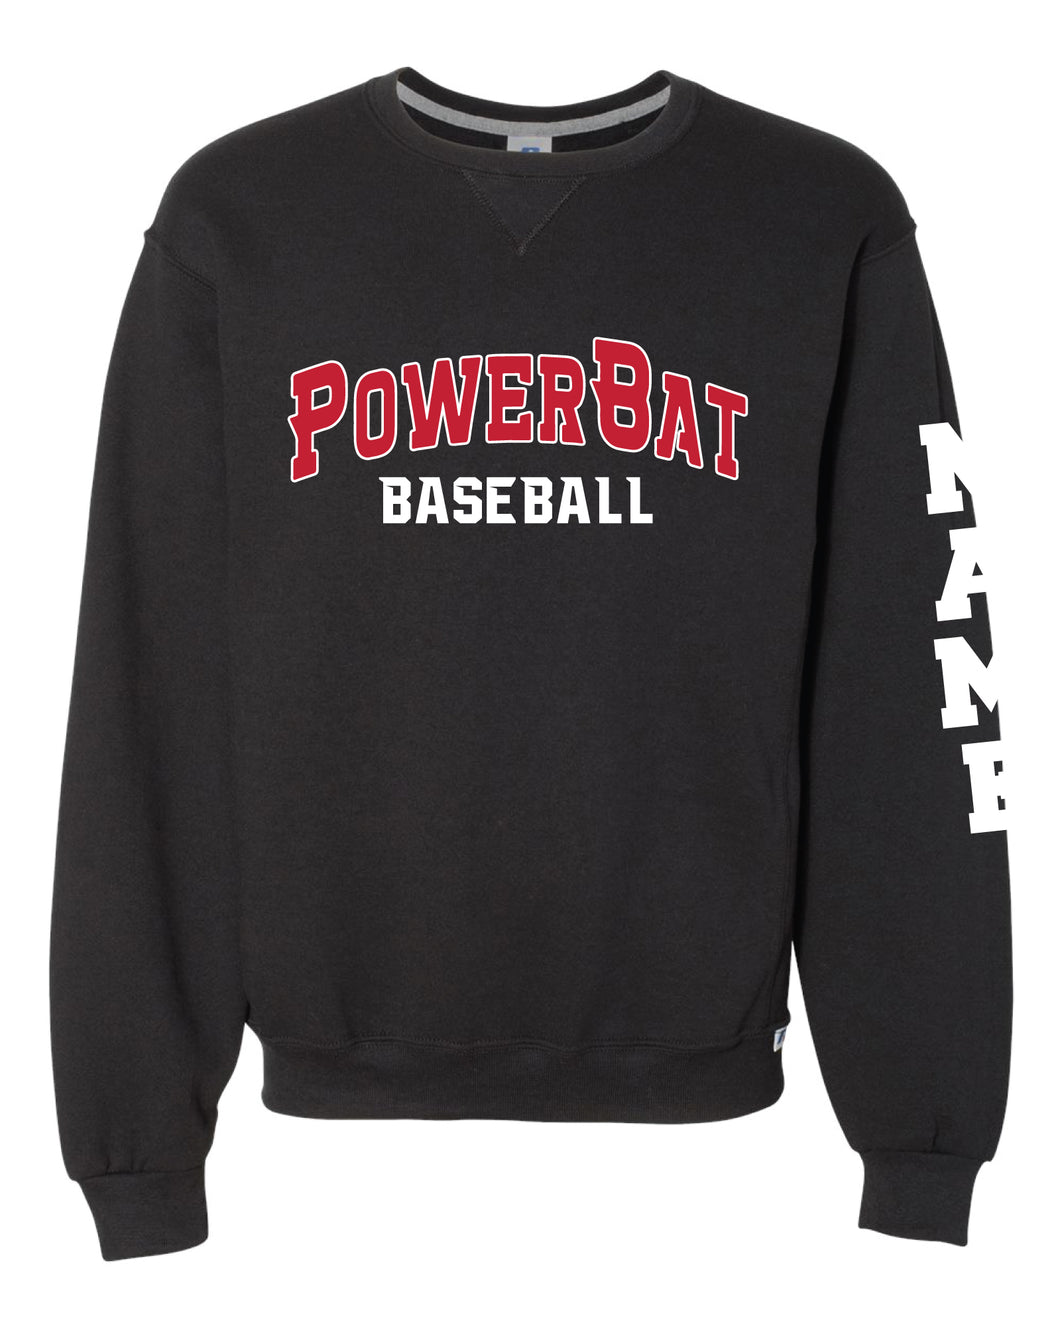 PowerBat Baseball Russell Athletic Cotton Crewneck Sweatshirt - Black - 5KounT